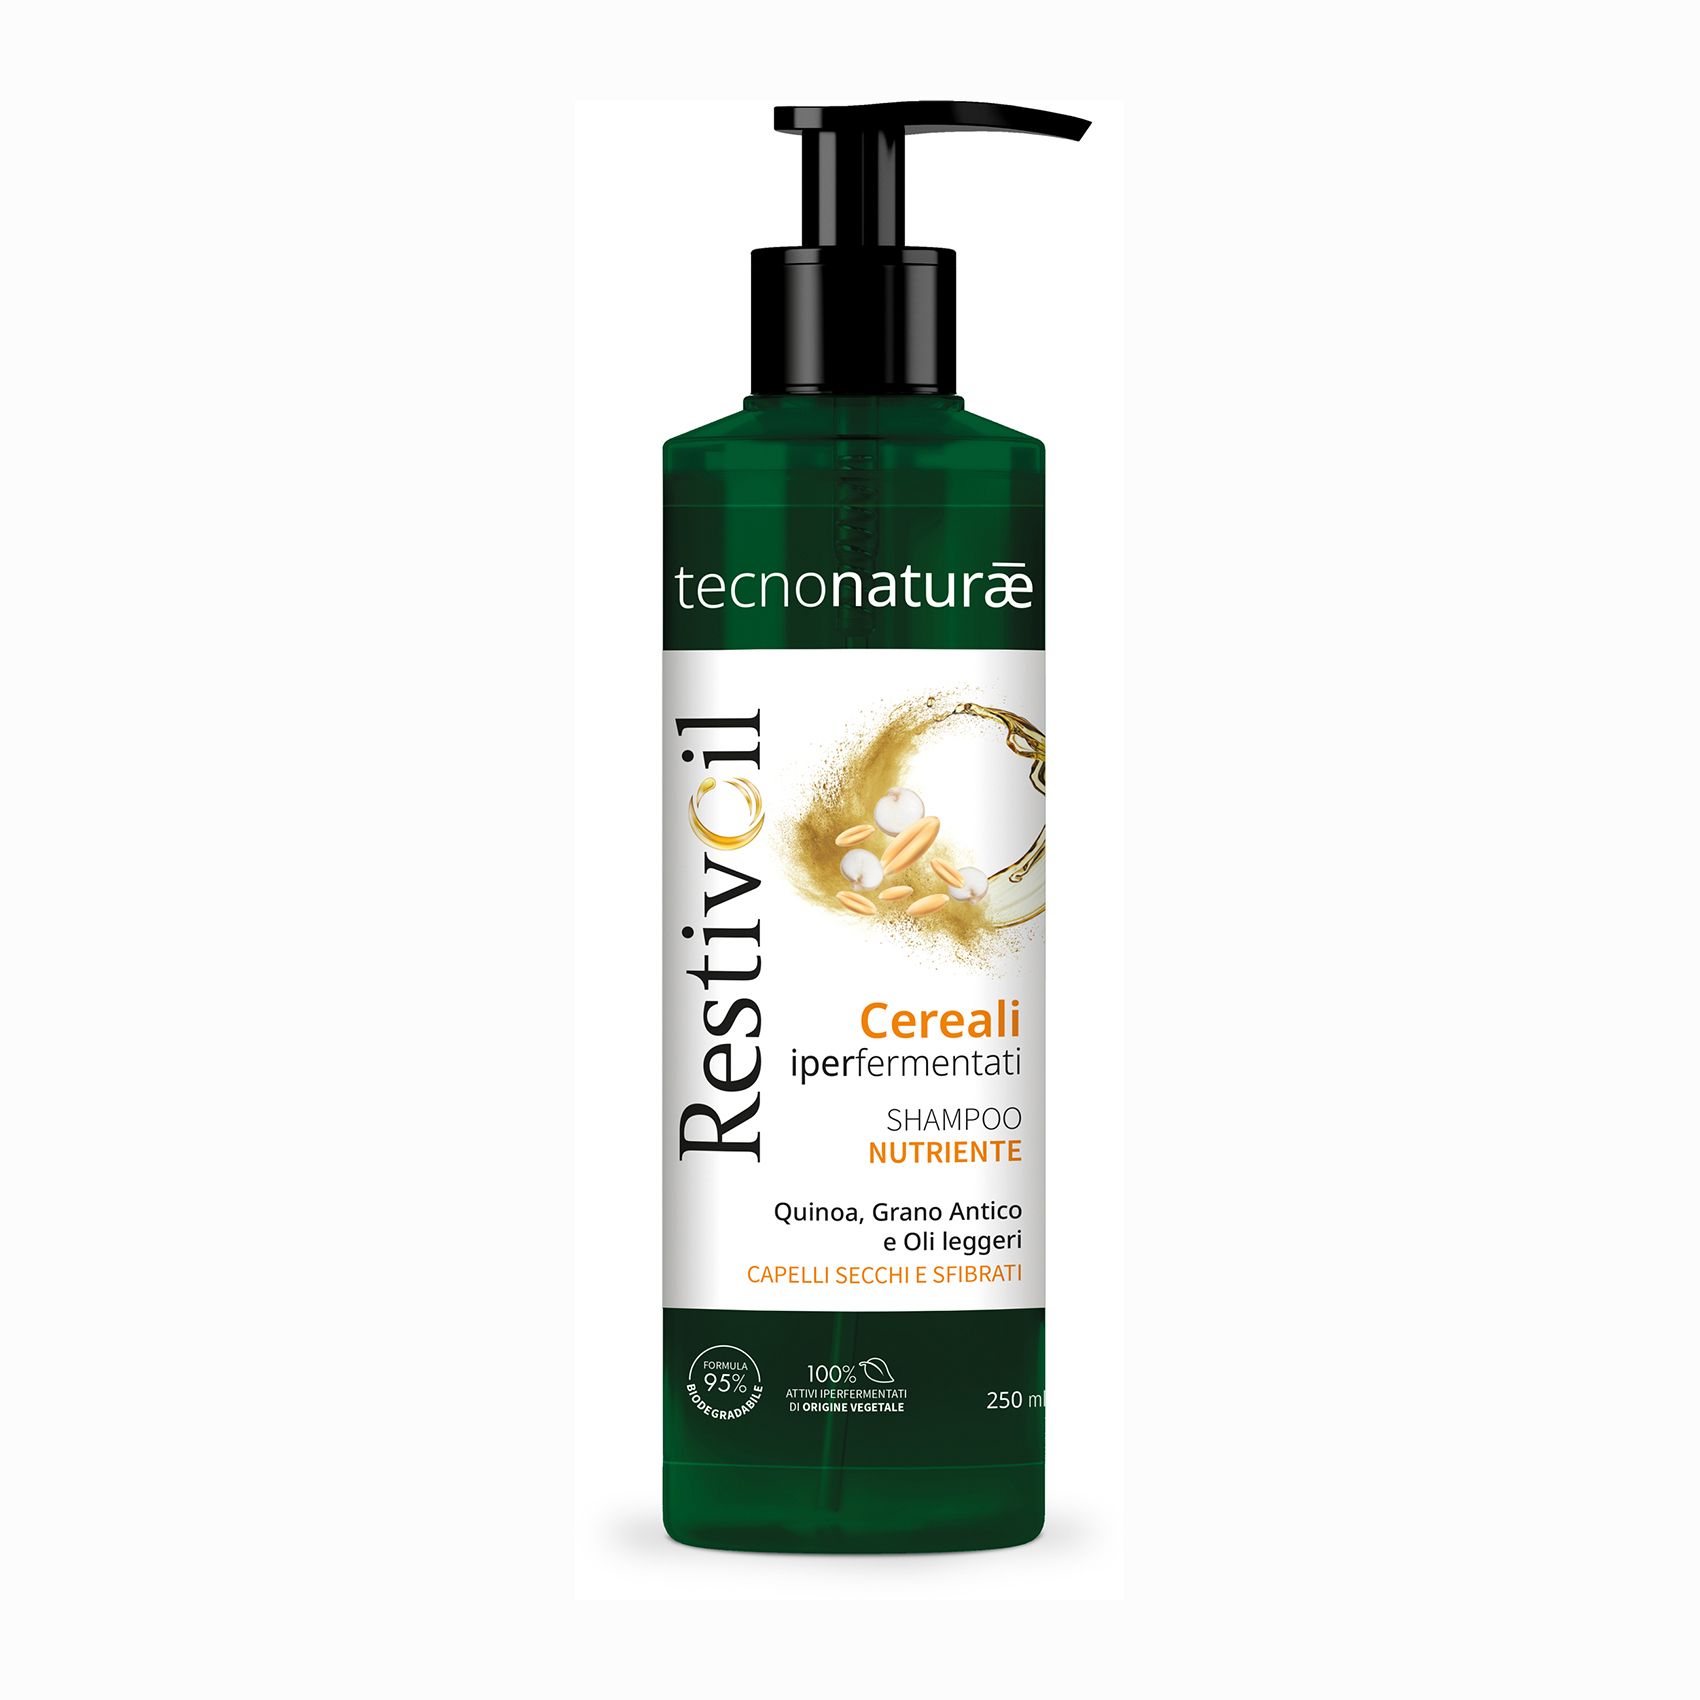 Restivoil Tecnonaturae Shampoo Nutriente Cereali Iperfermentati